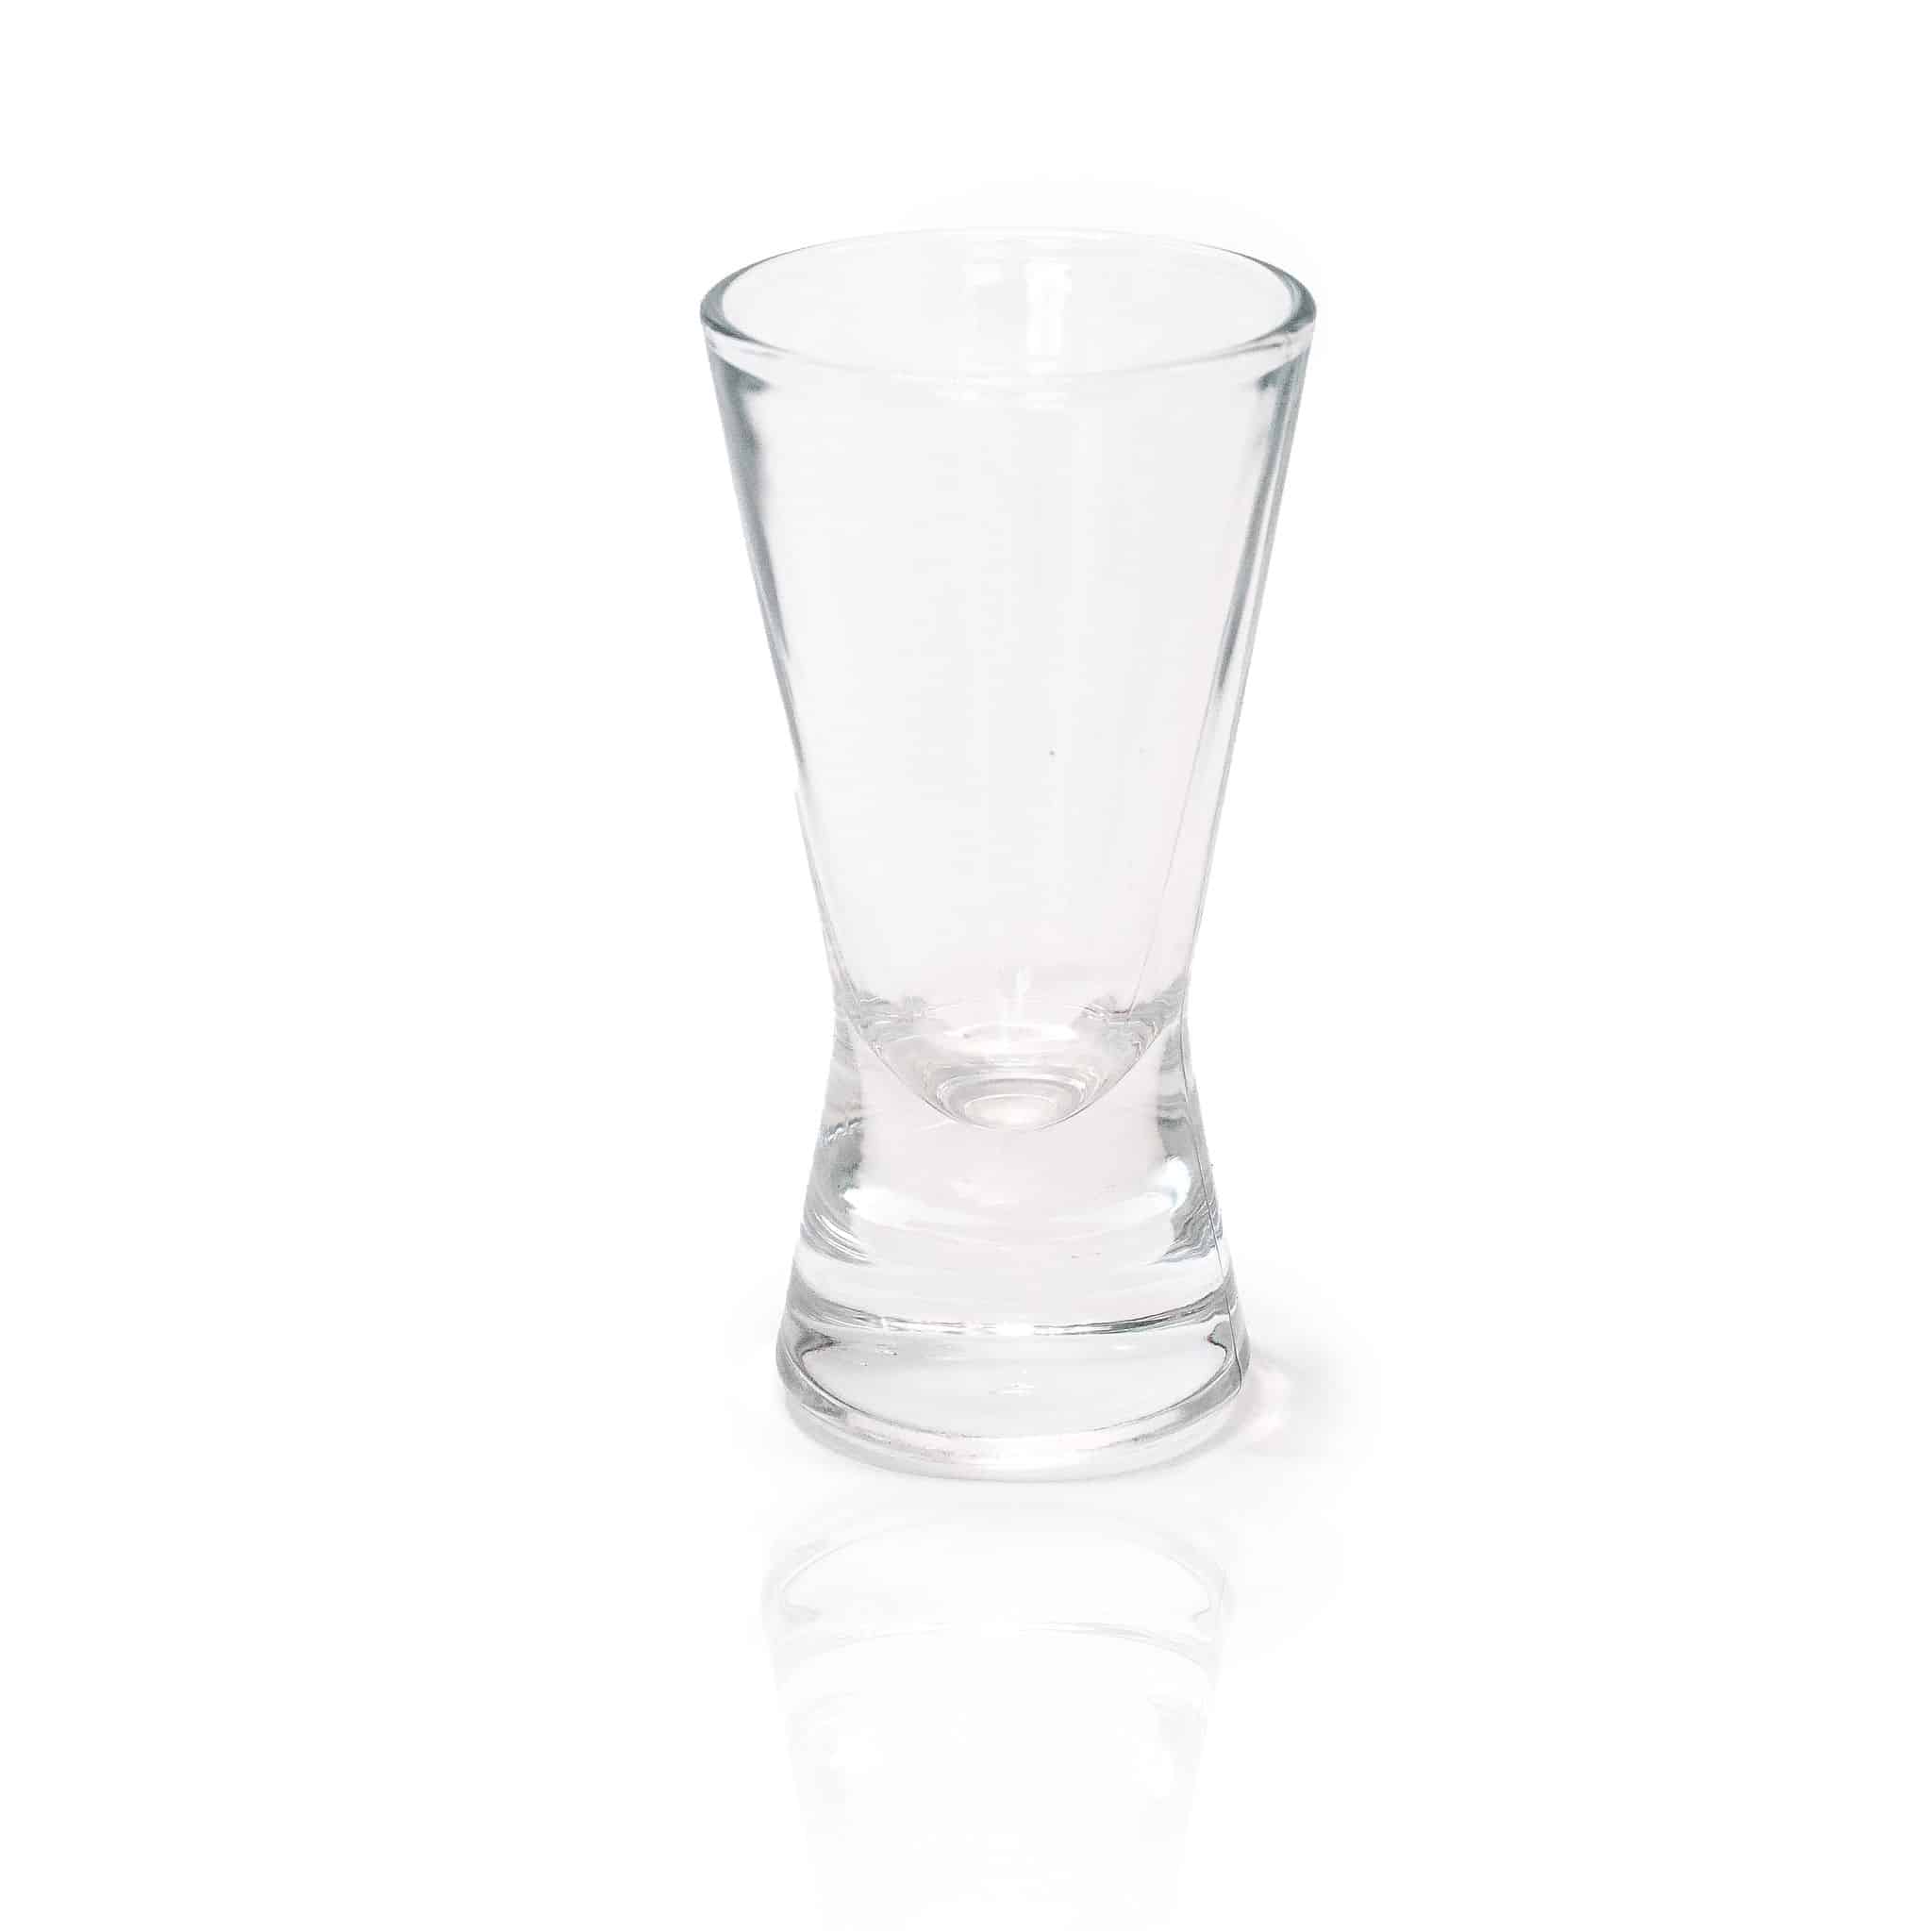 Cambridge Crystal Glassware - Glassware Rental, Tabletop Rentals - South  Florida Event Rentals